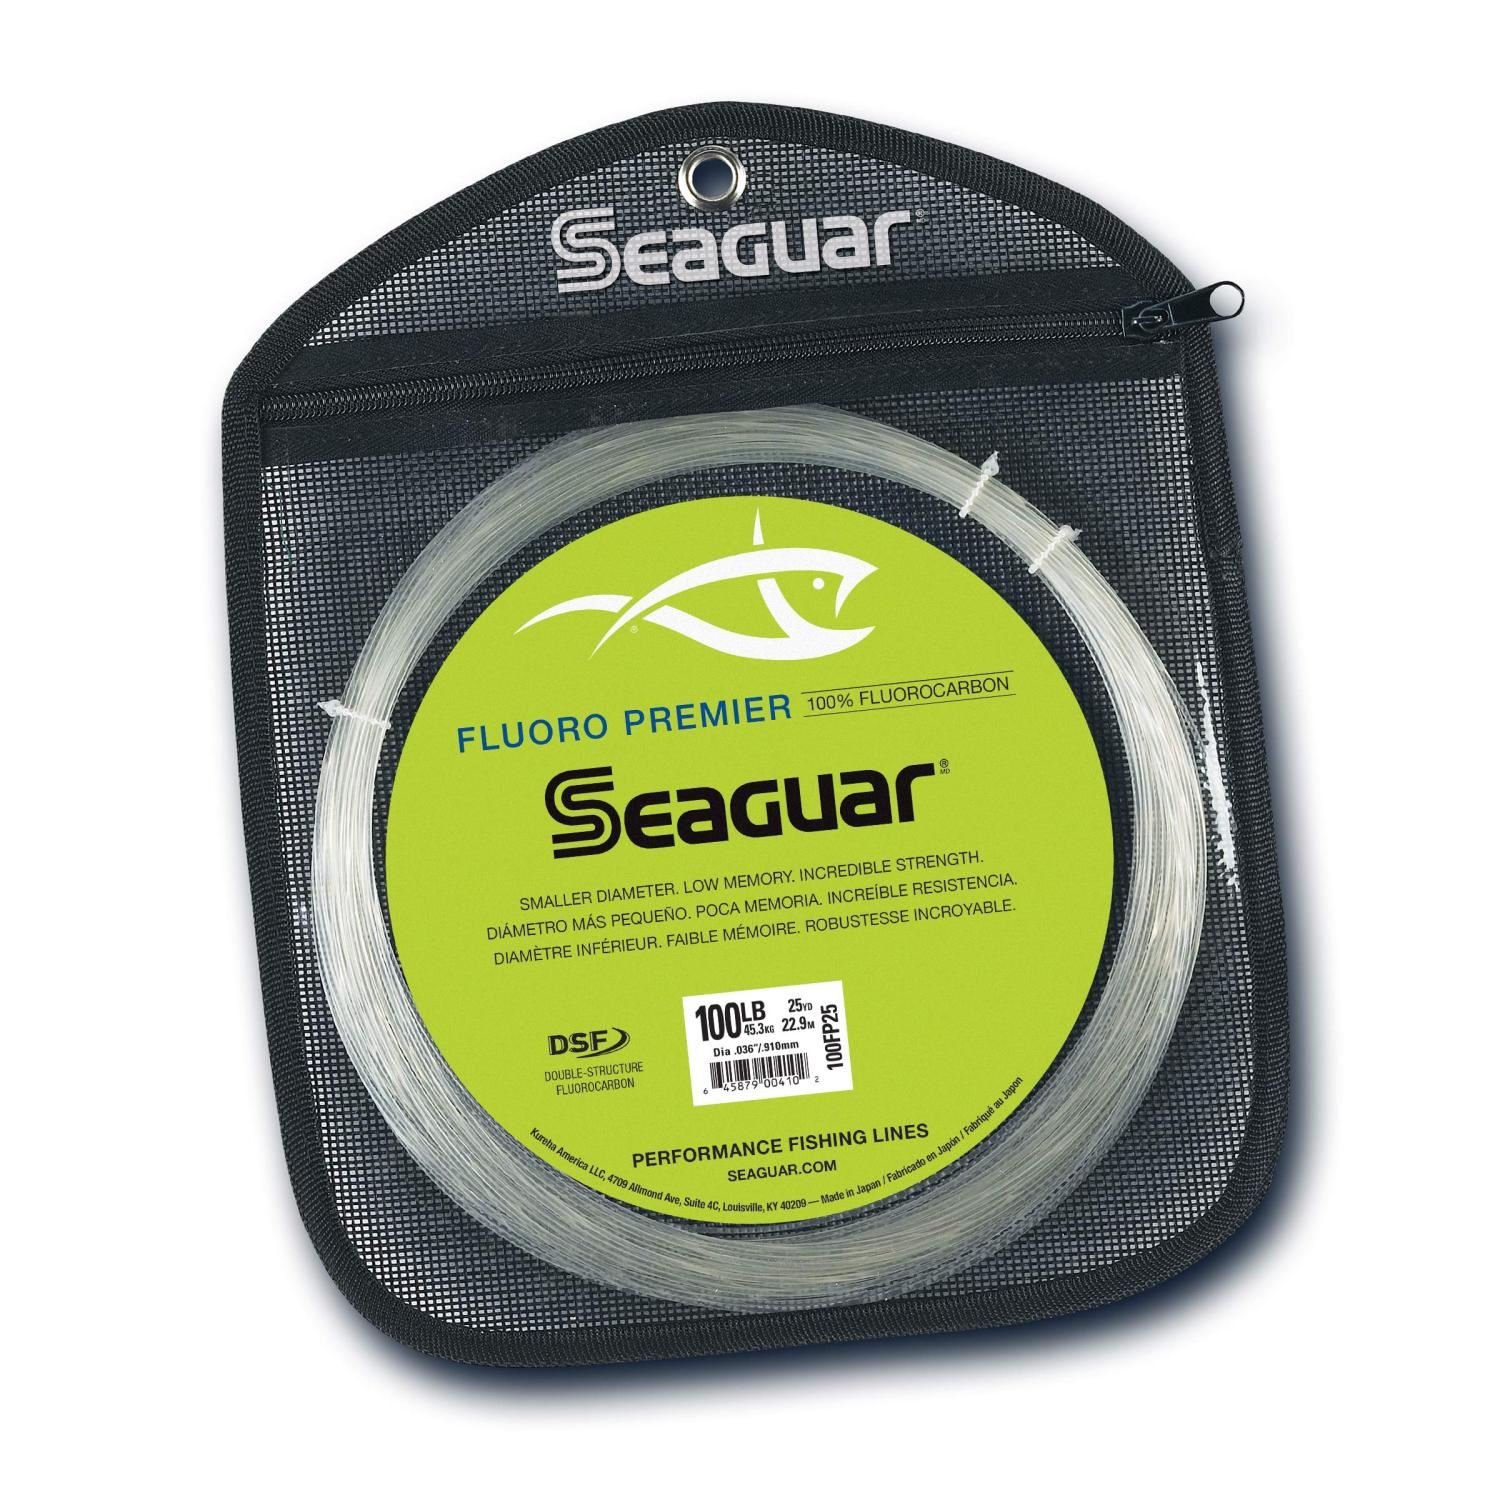 Seaguar Fluoro Premier 100% Fluorocarbon Fishing Line (DSF), 25